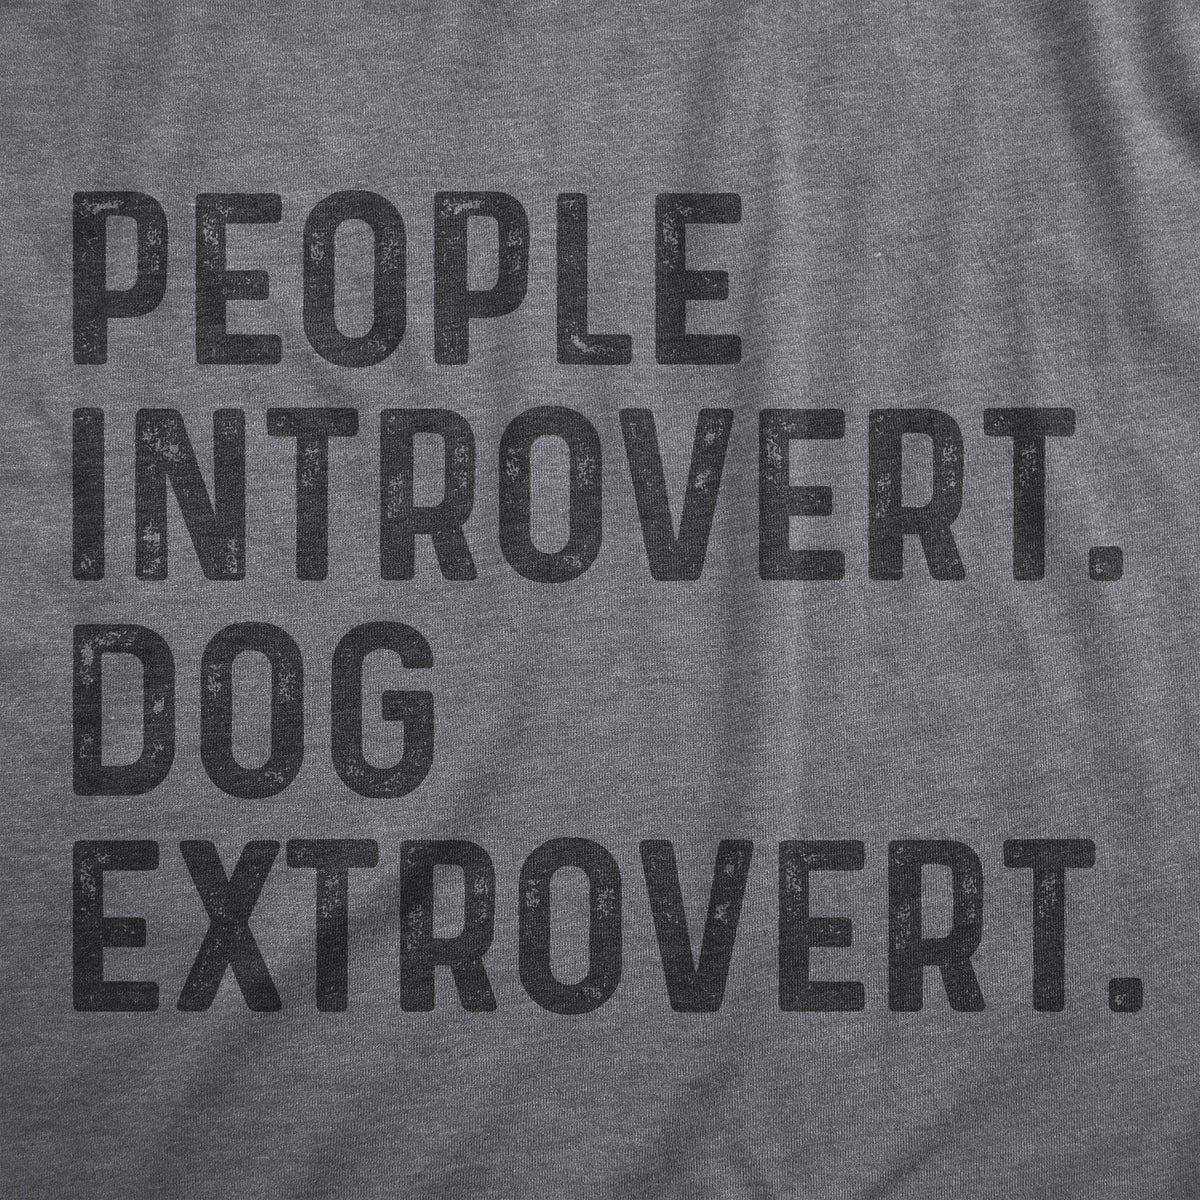 People Introvert Dog Extrovert Women&#39;s Tshirt  -  Crazy Dog T-Shirts